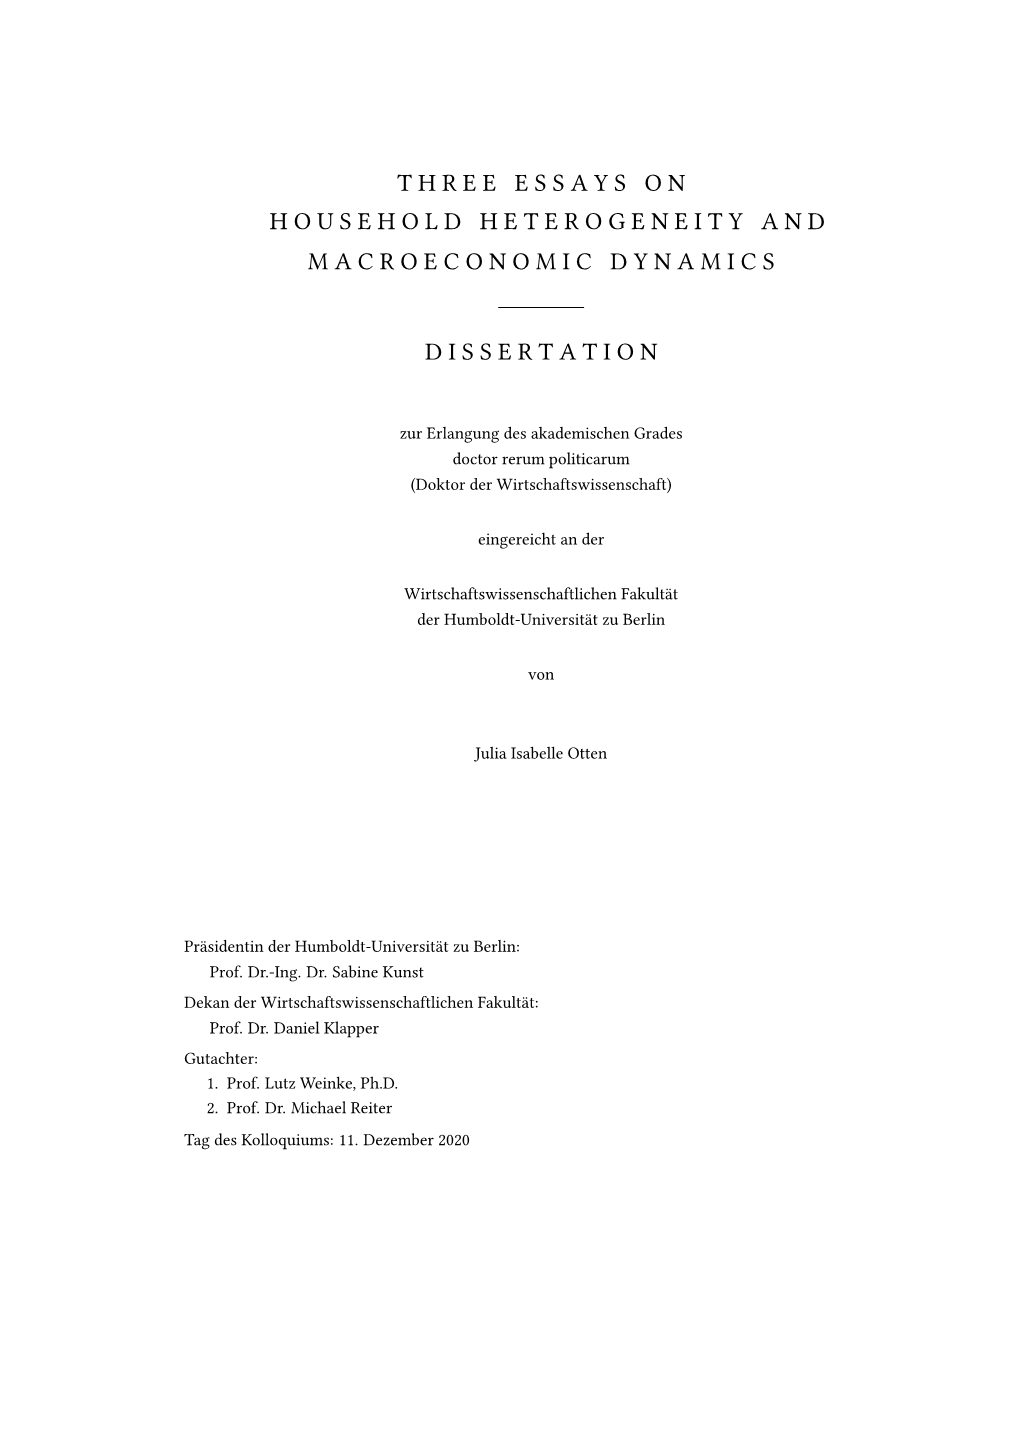 Three Essays on Household Heterogeneity and Macroeconomic